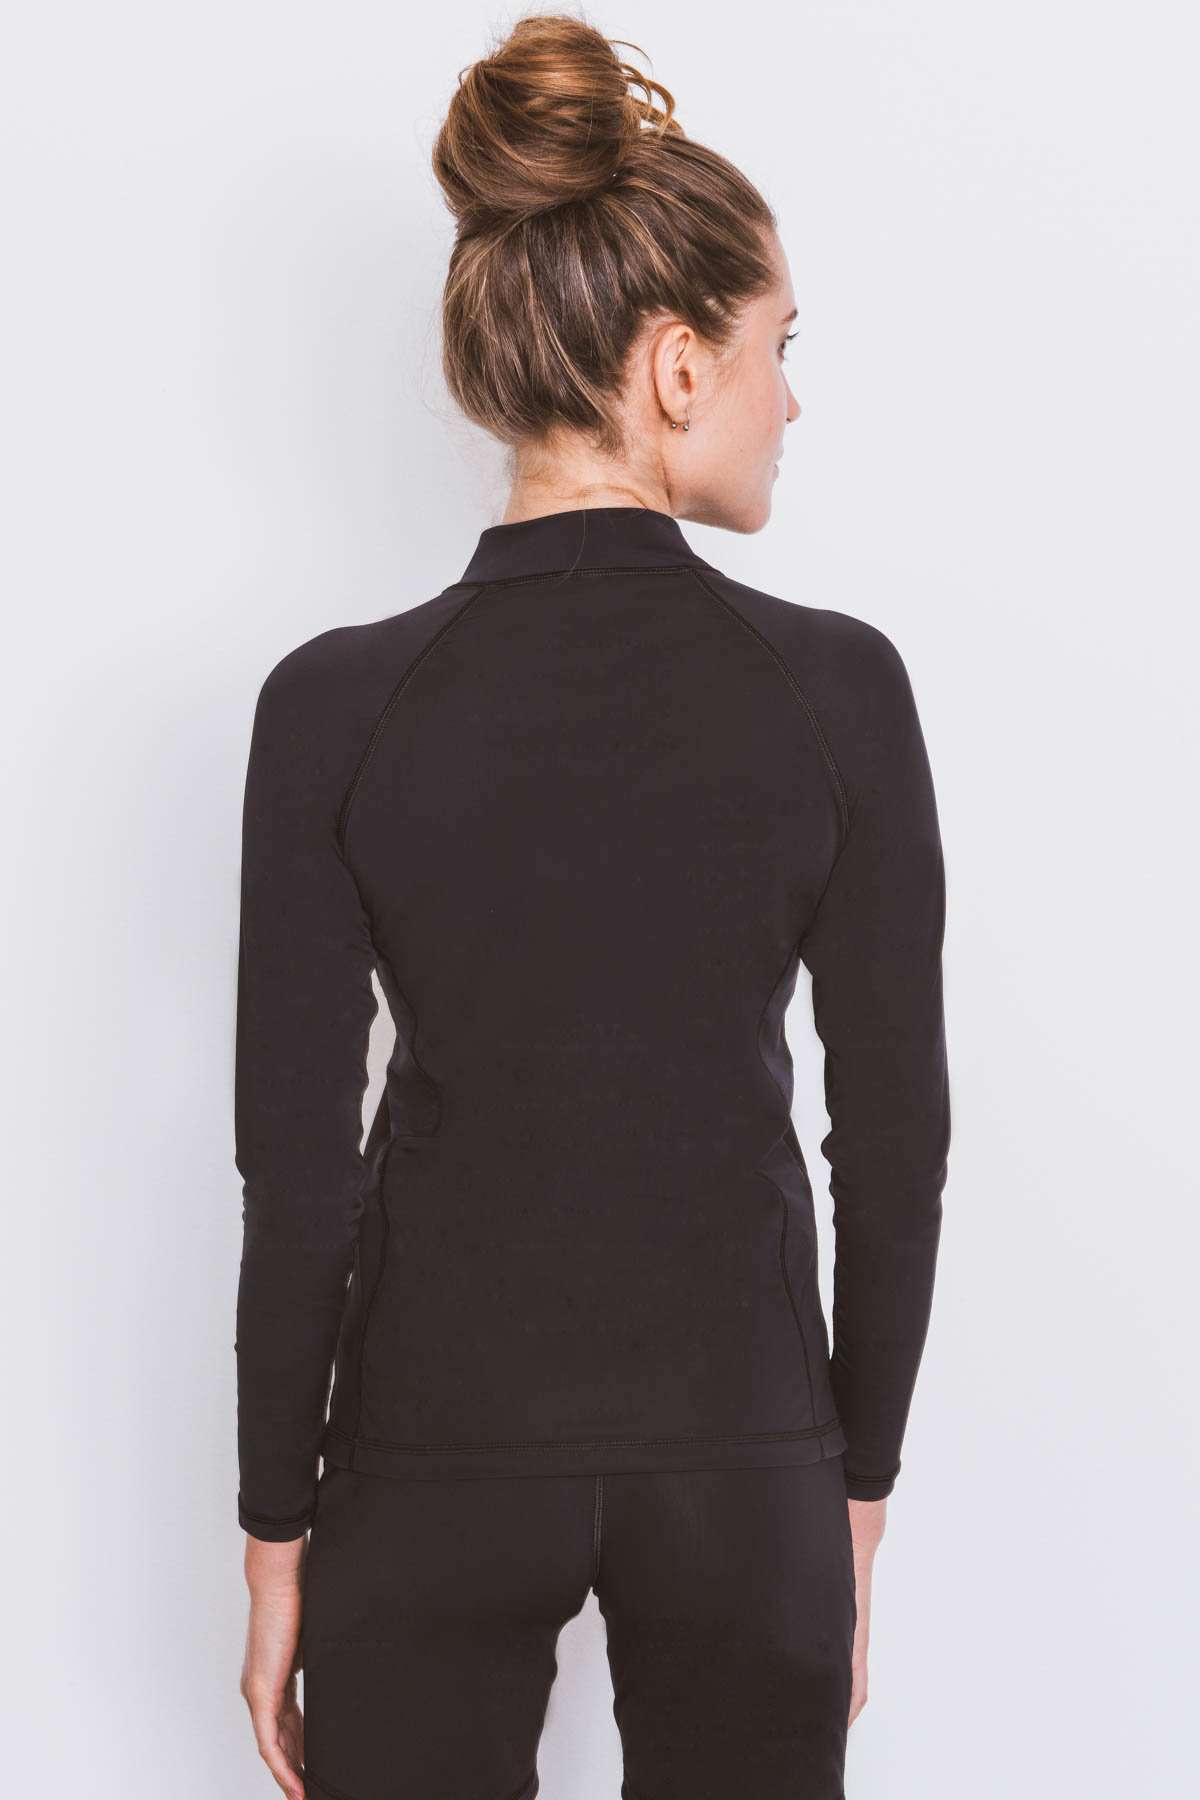 COEGA Ladies Rashguard - Long Sleeve with Full Zip – COEGA Sunwear Online  Store